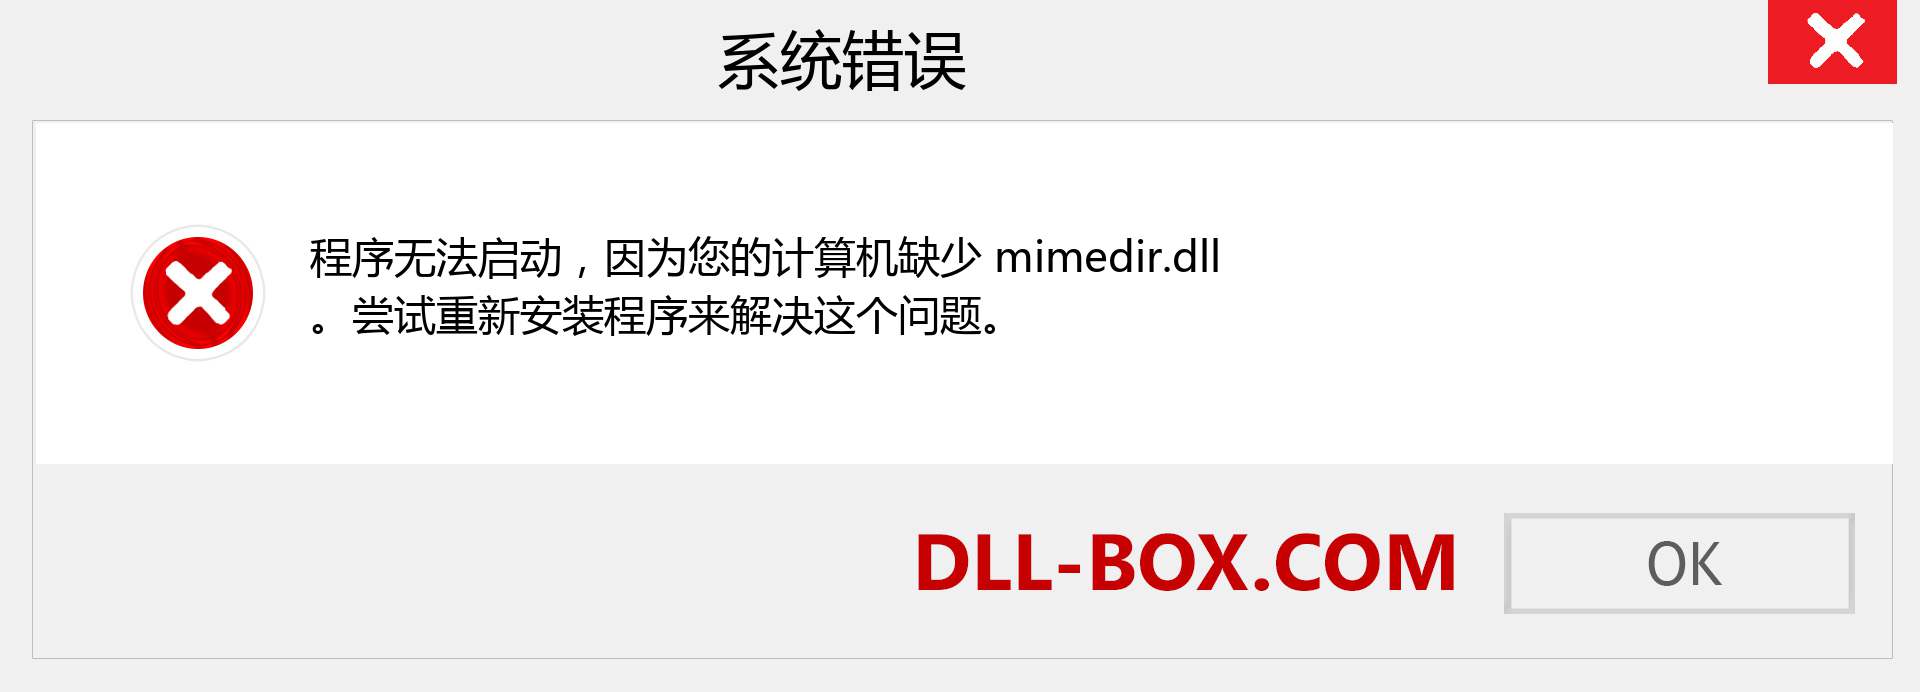 mimedir.dll 文件丢失？。 适用于 Windows 7、8、10 的下载 - 修复 Windows、照片、图像上的 mimedir dll 丢失错误